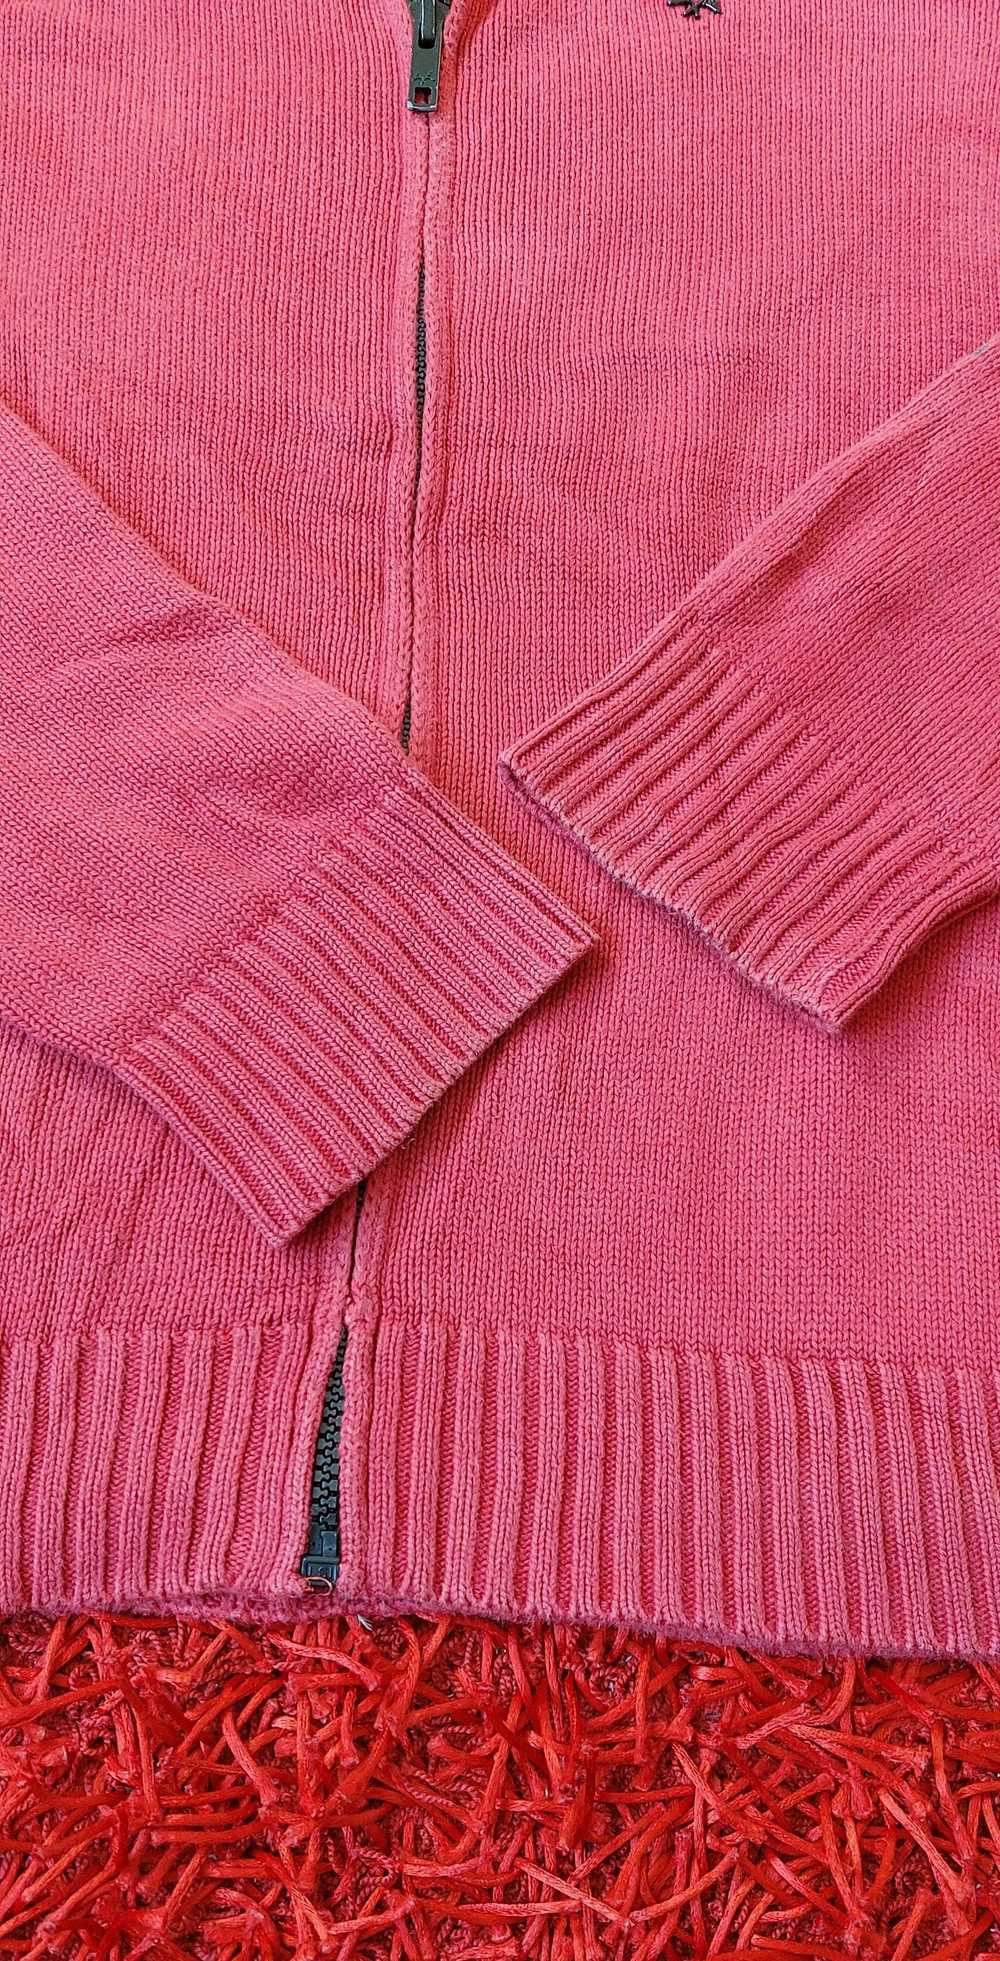 Burberry Thomas Burberrys Sweatshirt Red Size XL - image 5